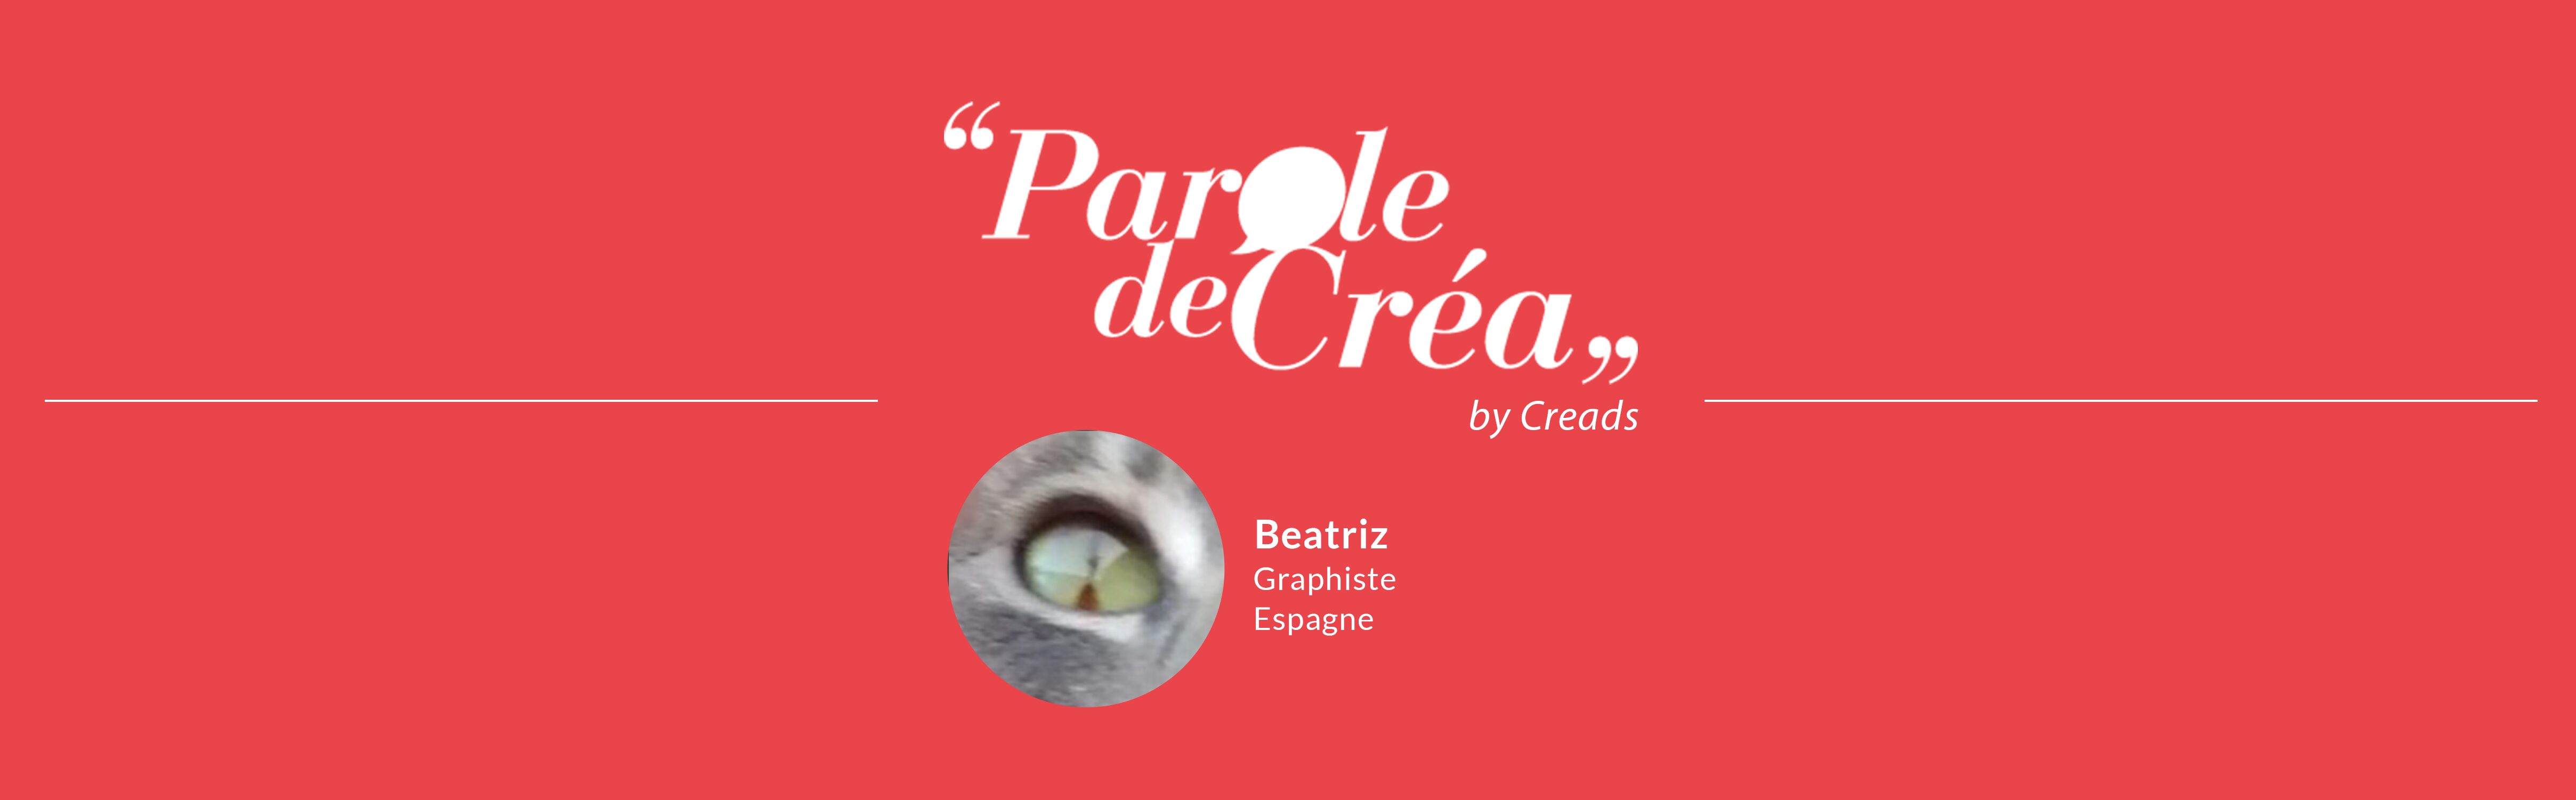 Paroles de créa - Beatriz from Spana !